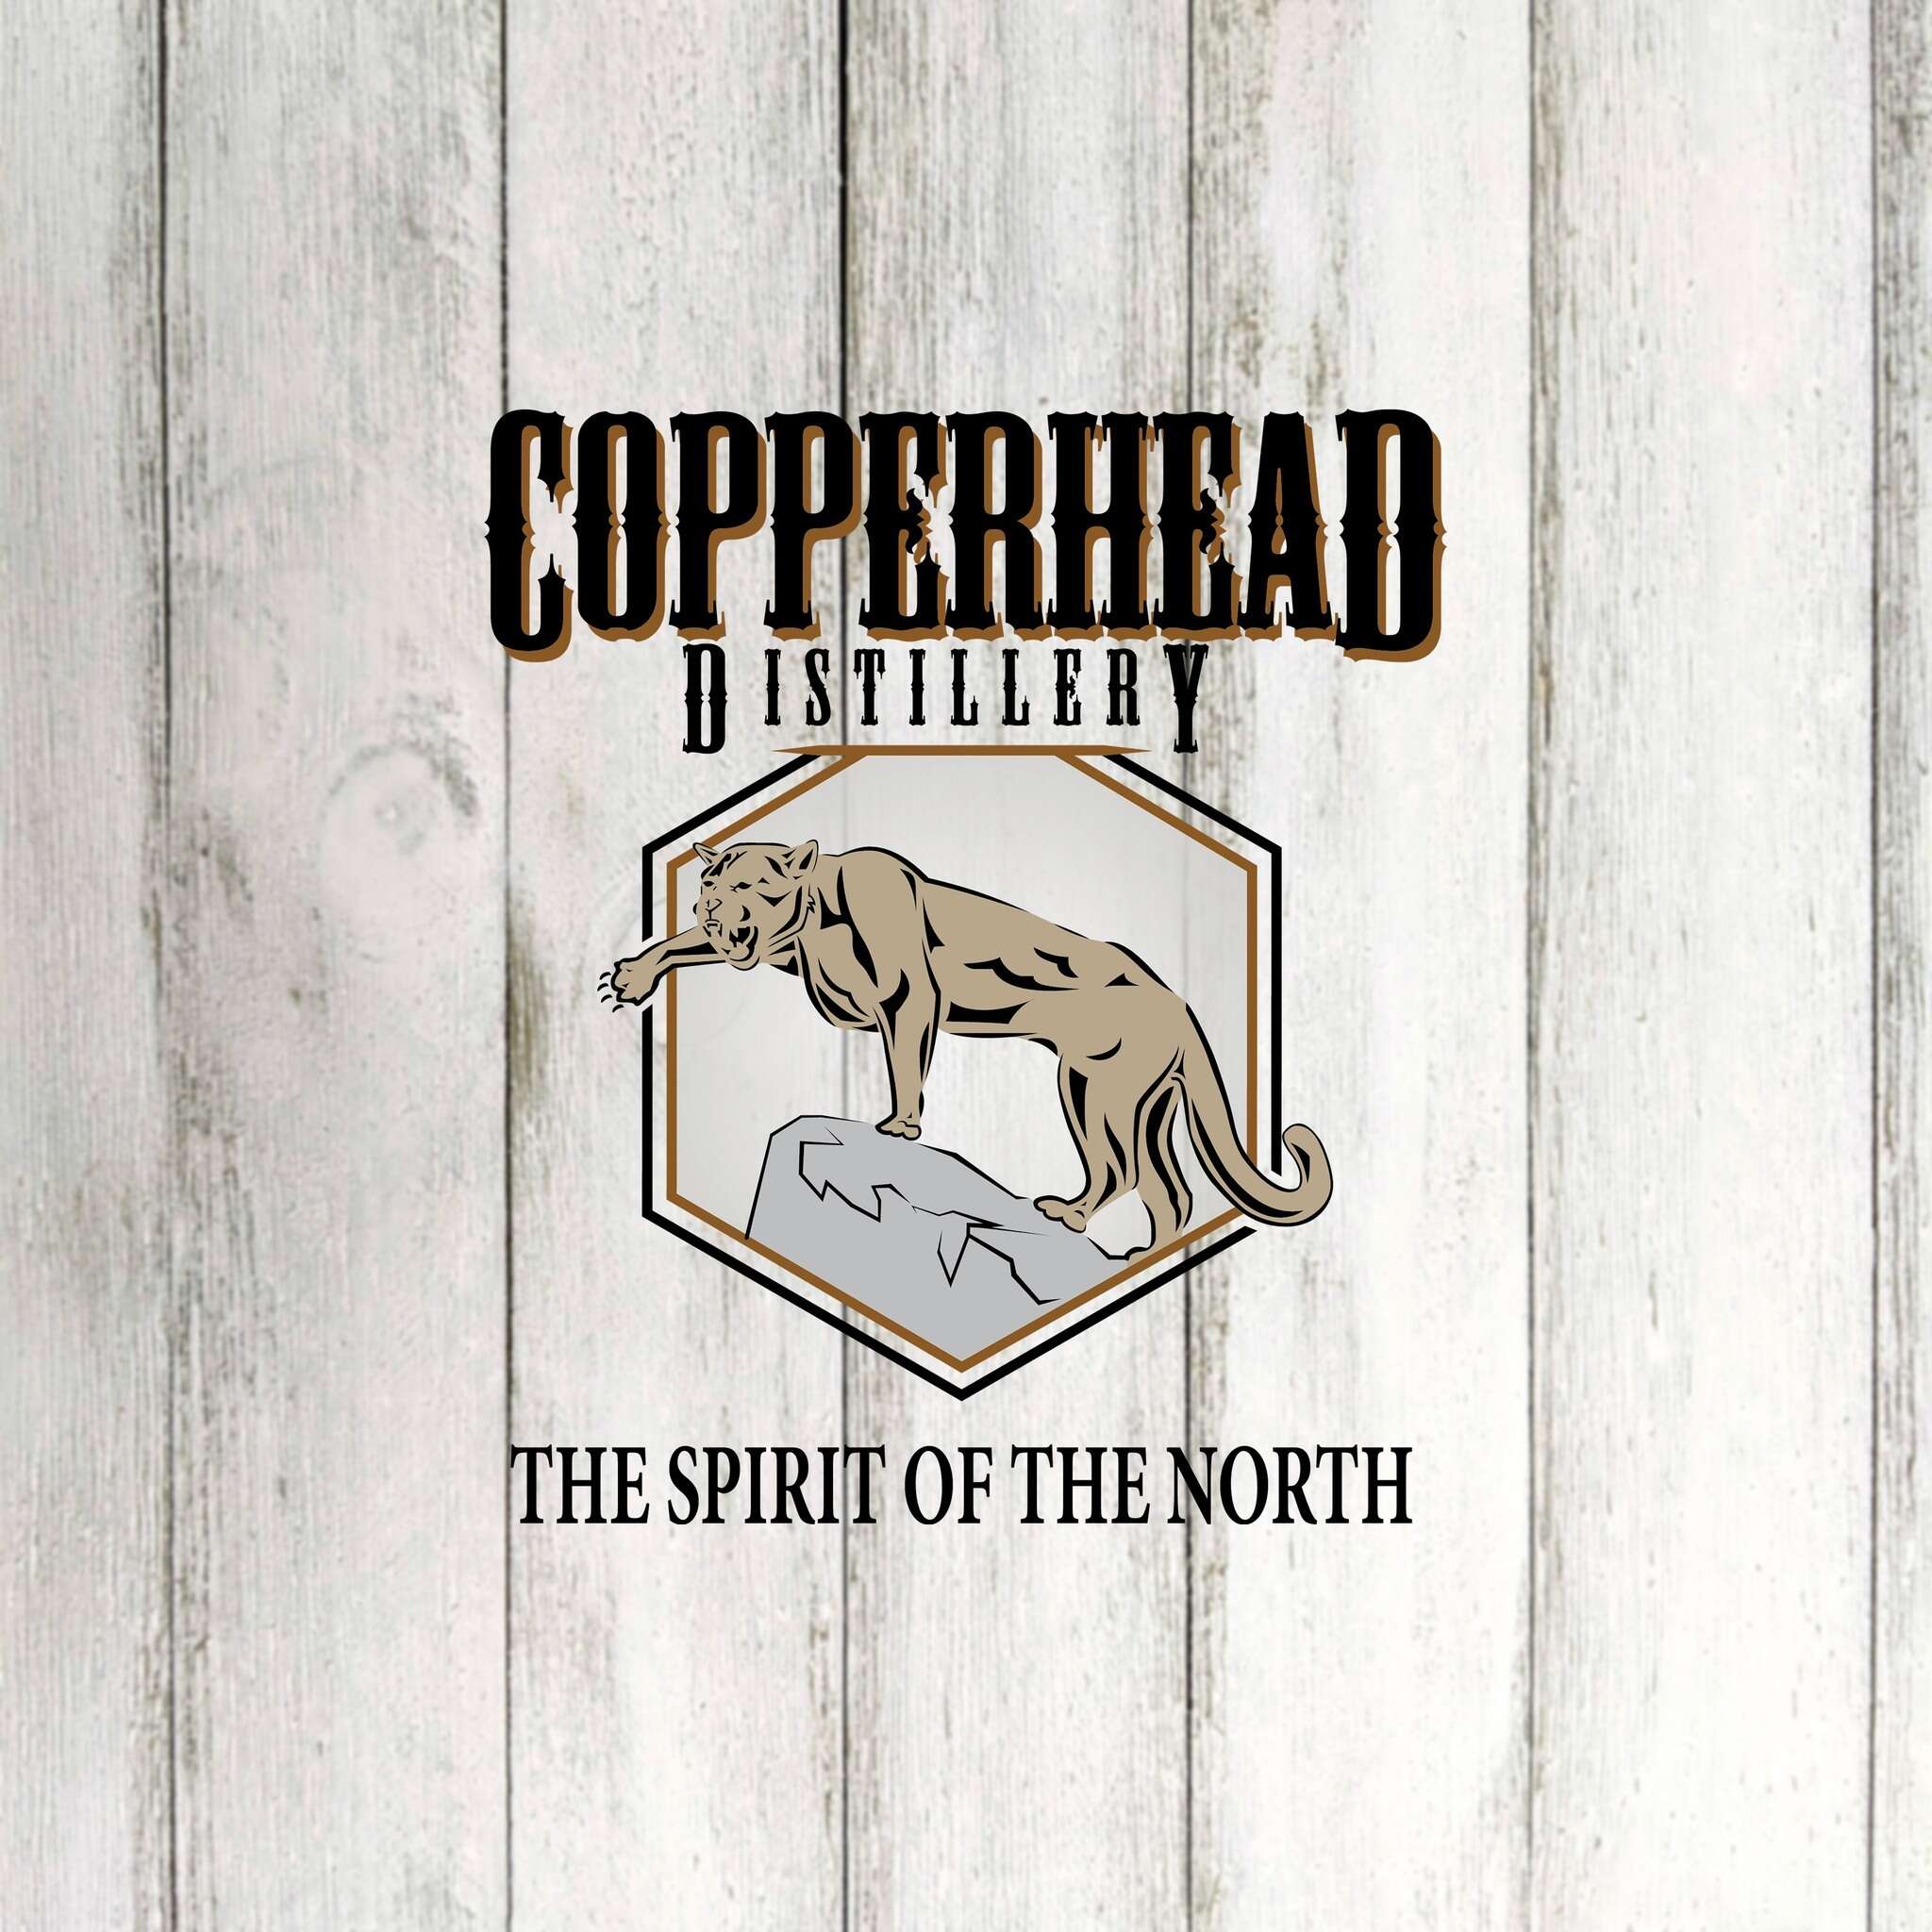 Copperhead Distillery